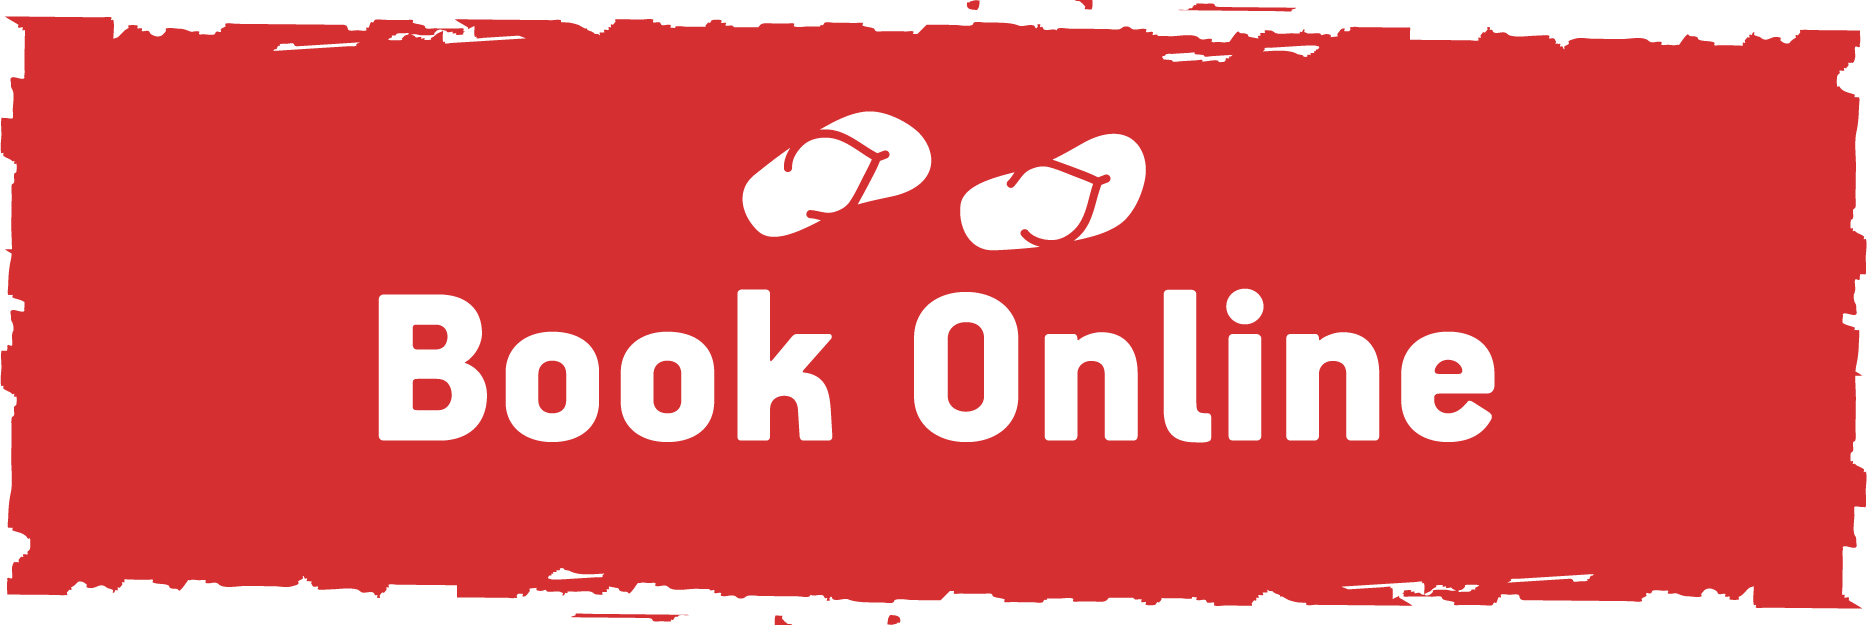 Book online